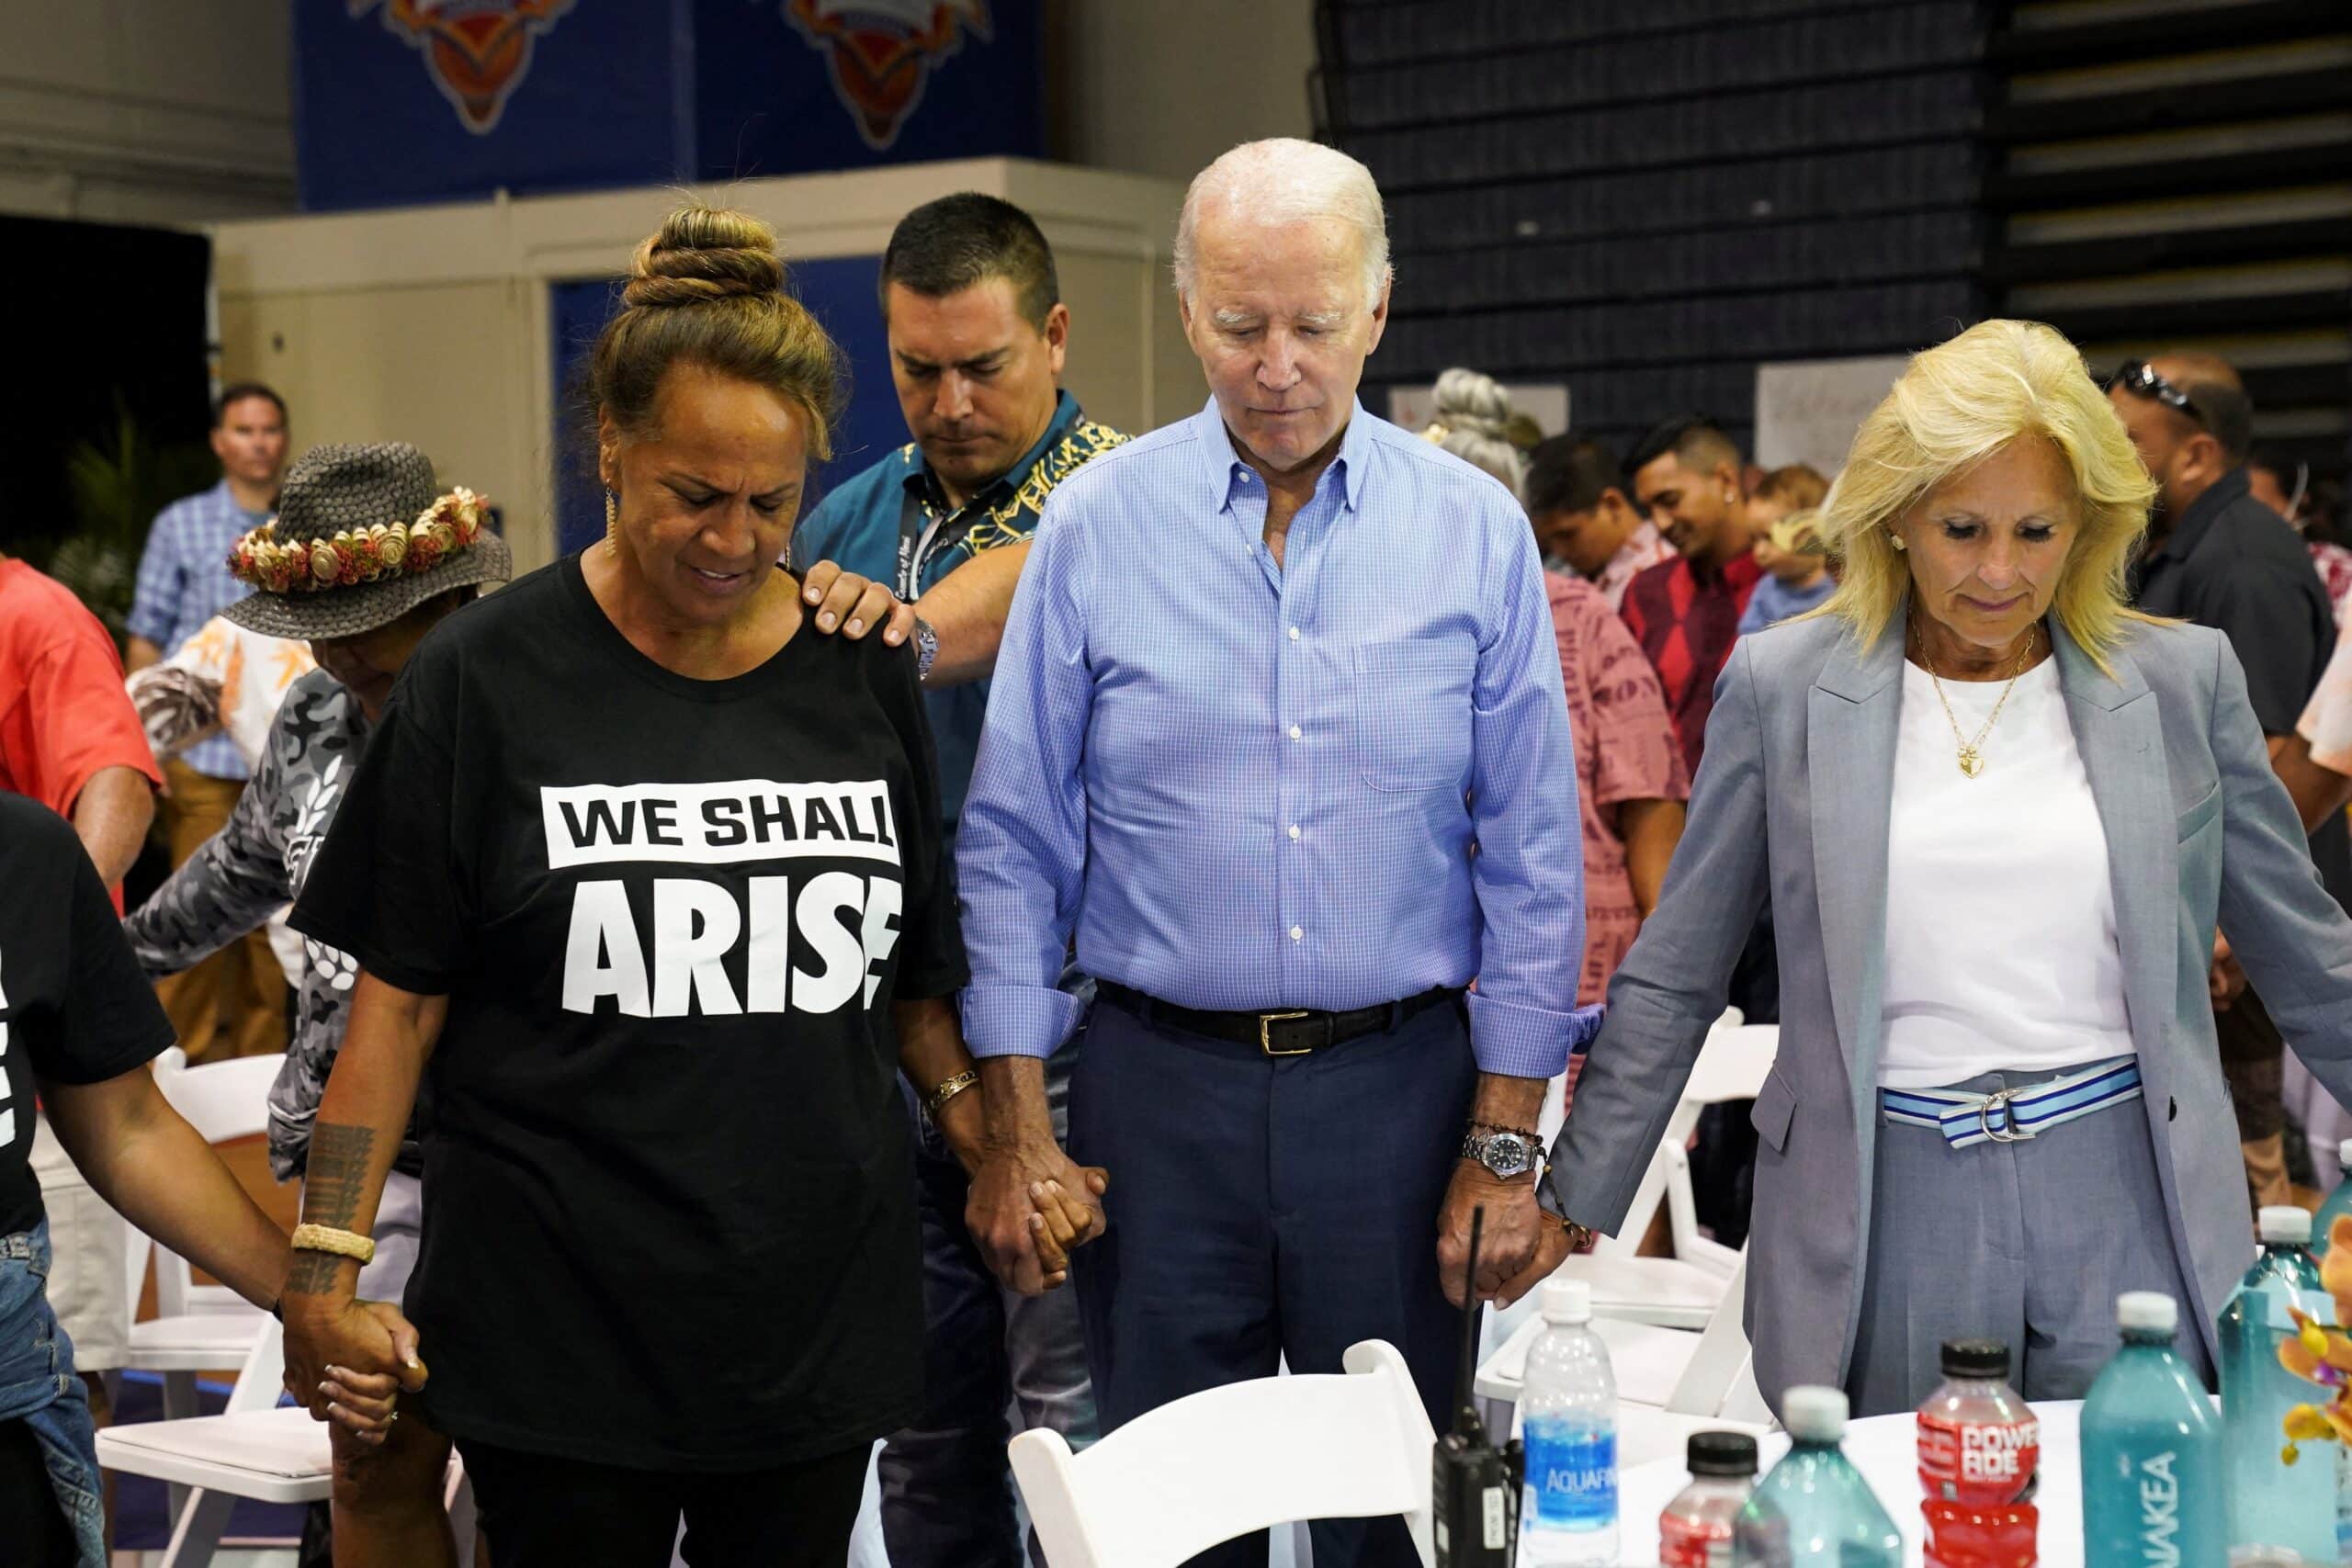 U.S. President Joe Biden and first lady Jill Biden praying with others